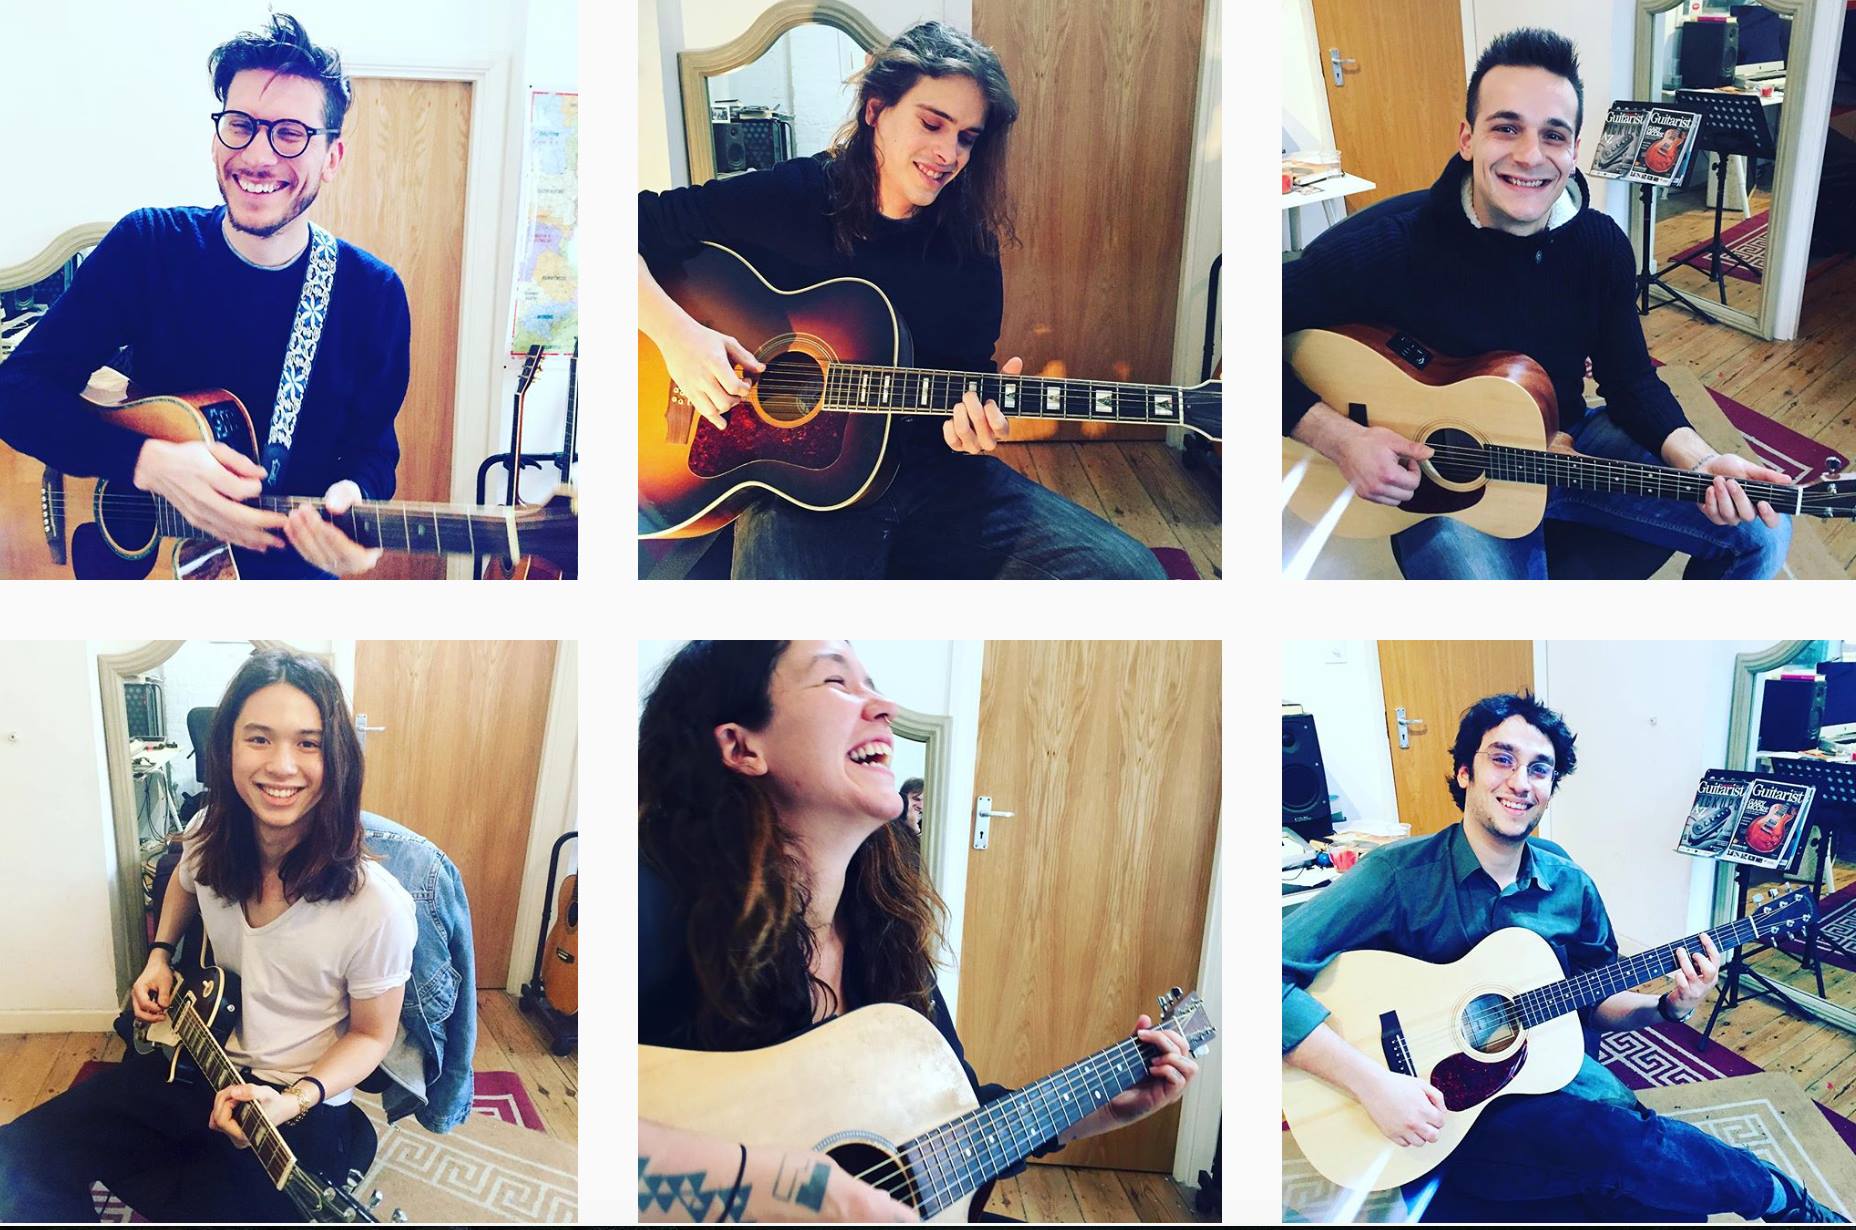 Guitar Lessons in Loughton Essex Guitar Lessons and Guitar Teachers in Loughton